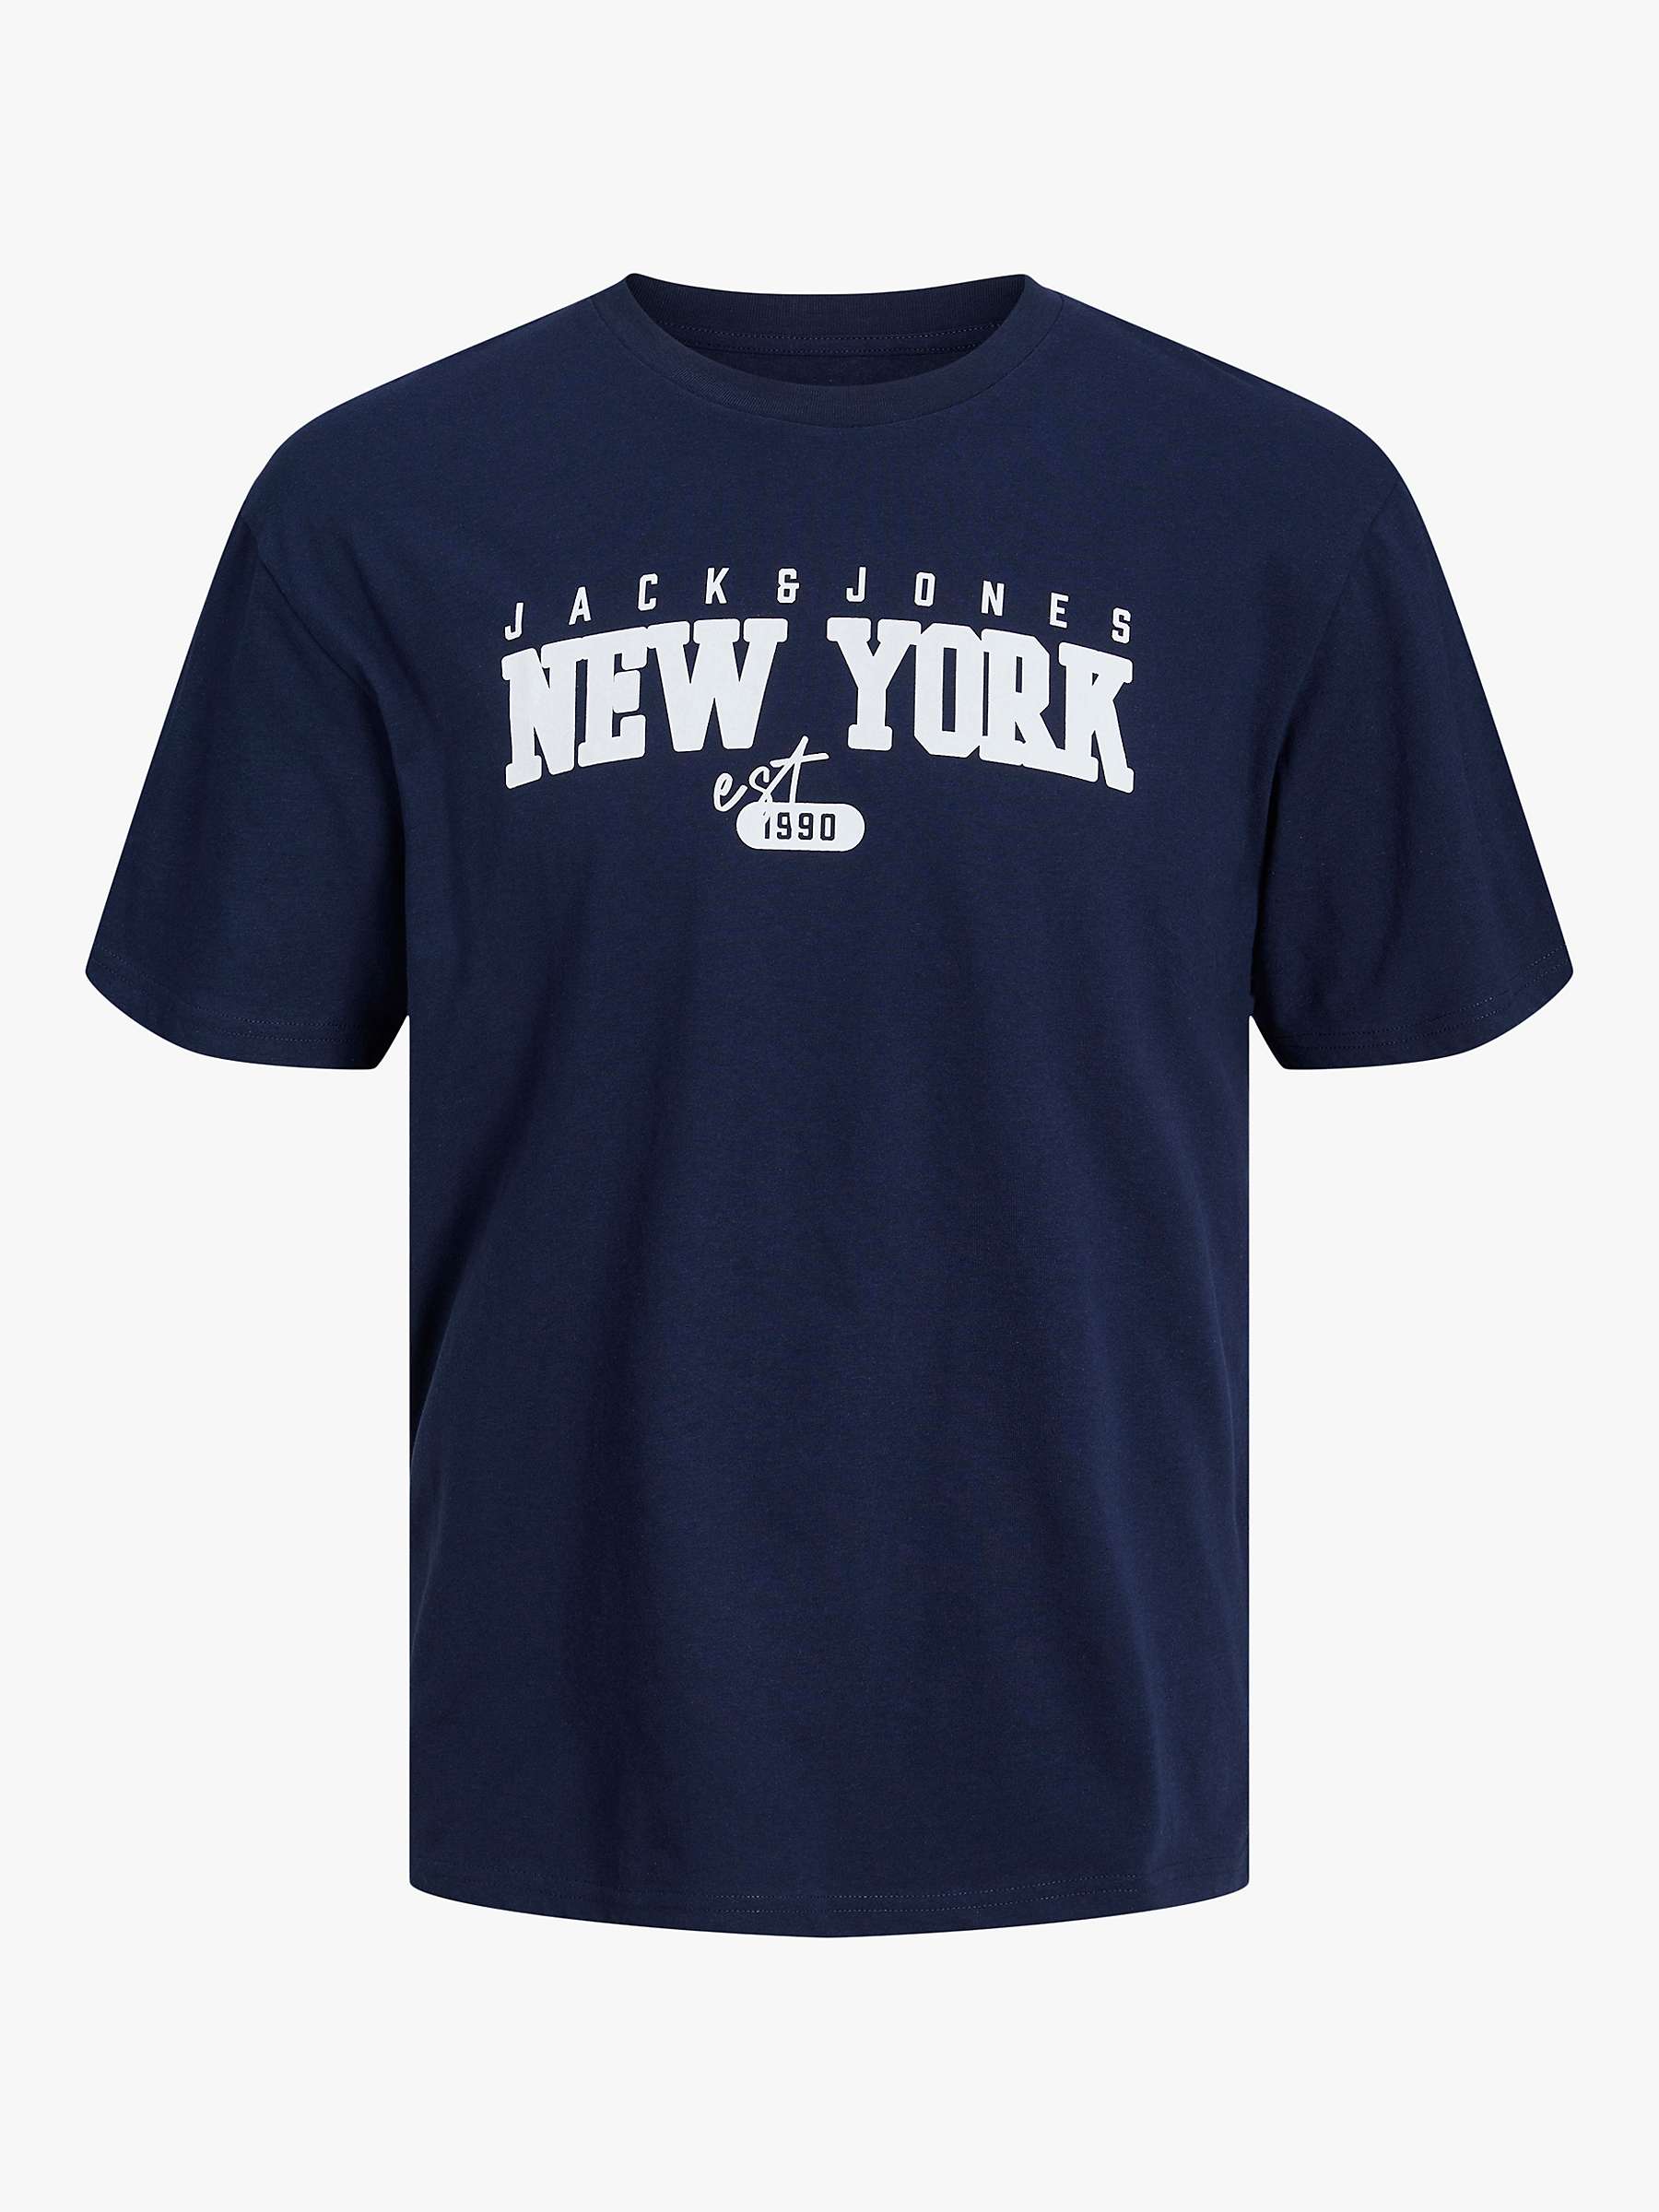 Buy Jack Jones Kids' Cory New York Cotton T-Shirt, Navy Online at johnlewis.com